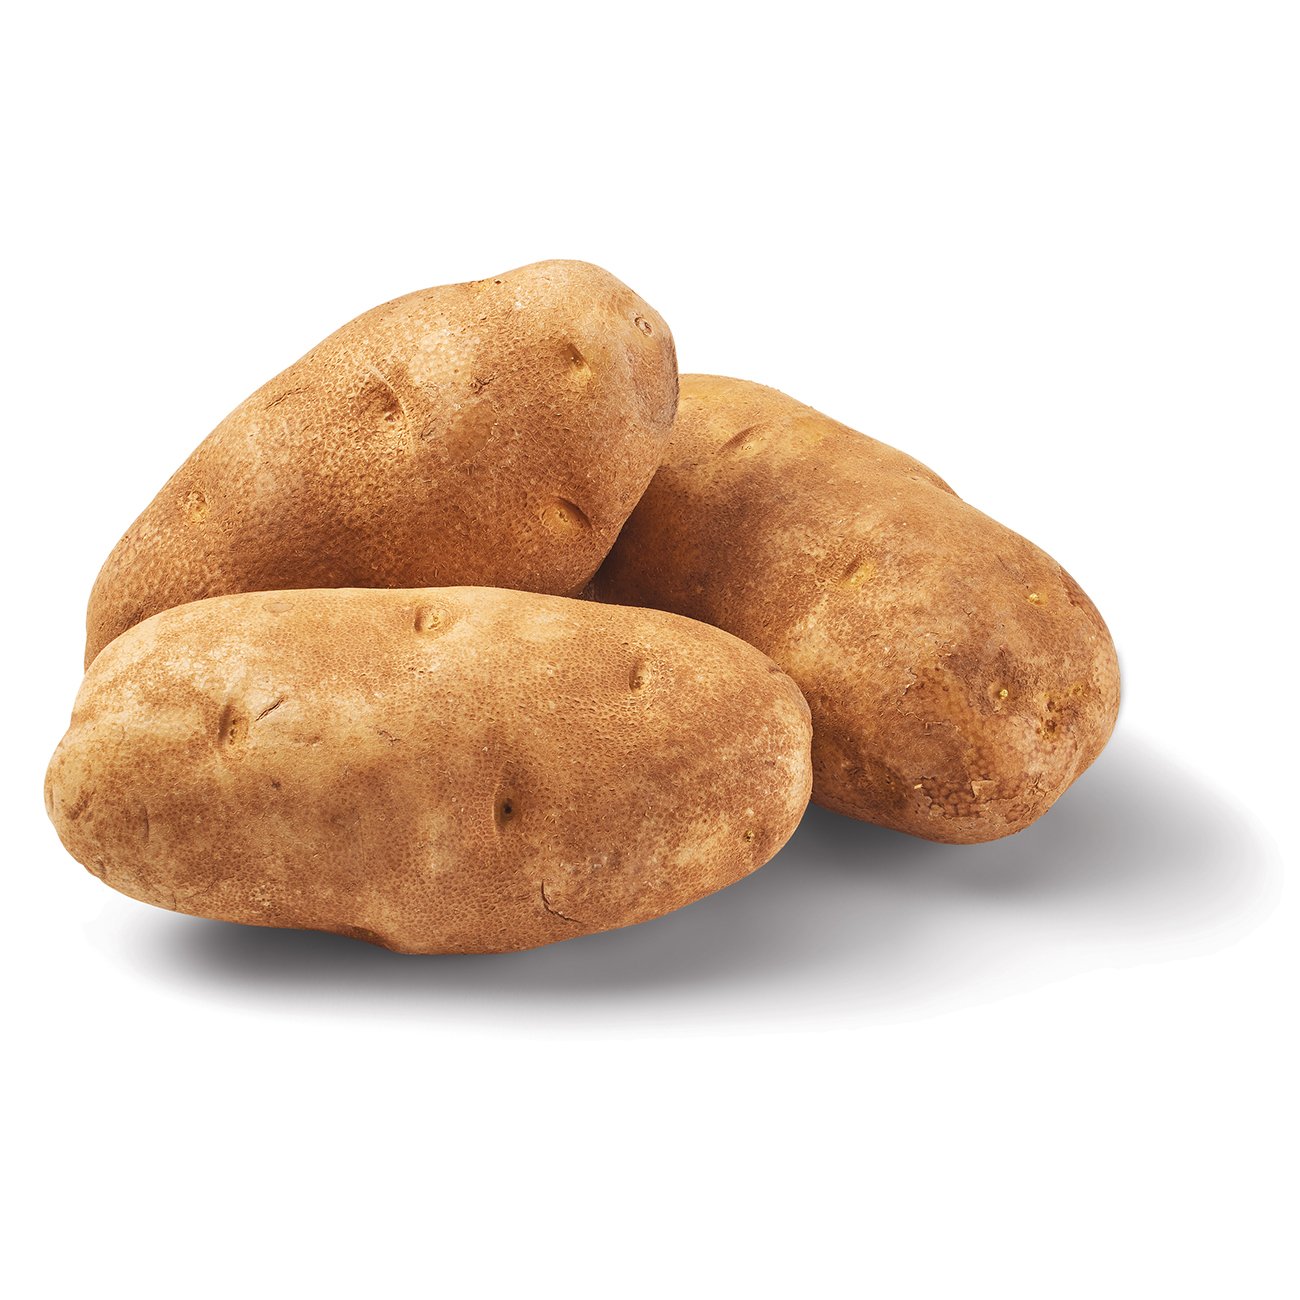 Russet Potato, 1 lb - Fry's Food Stores